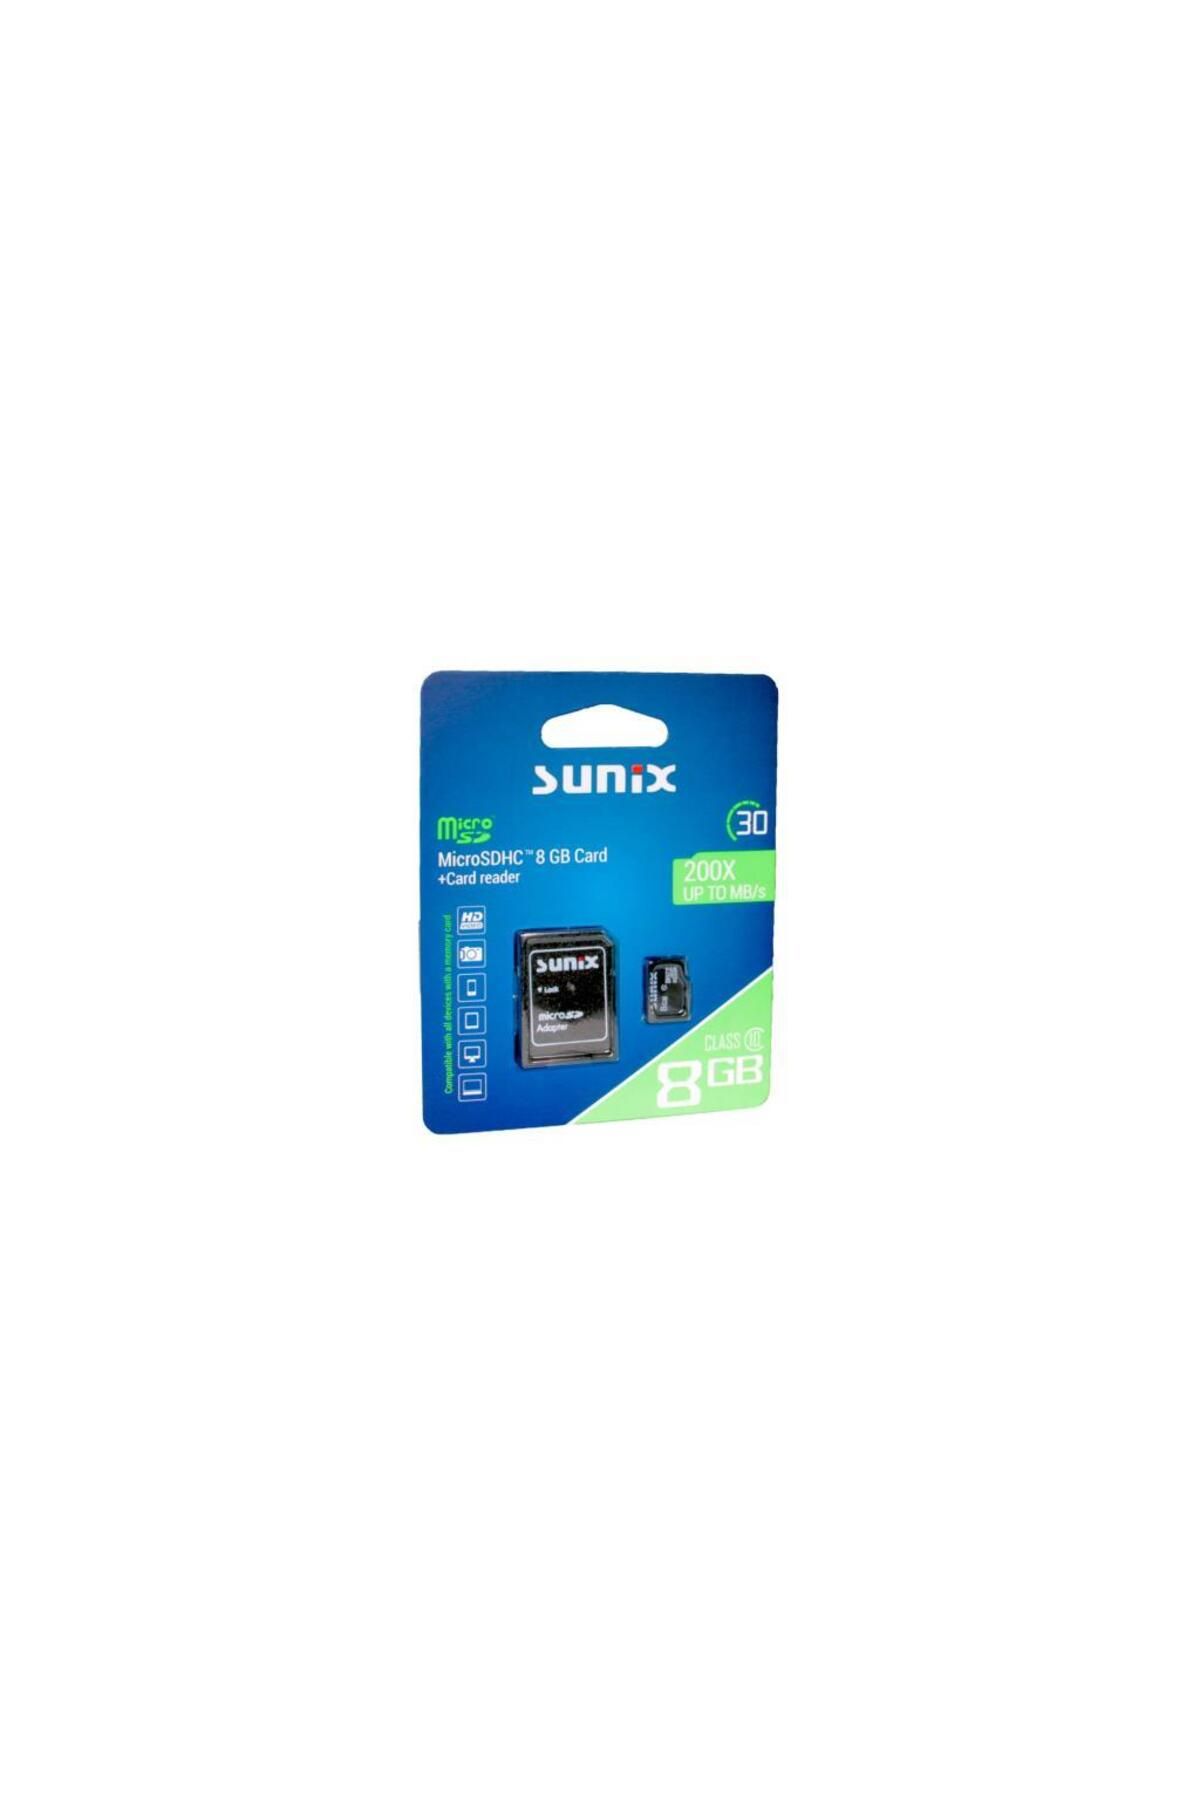 Sunix 200x Up To Mb/s Class 10 Microshdc 8 Gb Hafıza Kartı